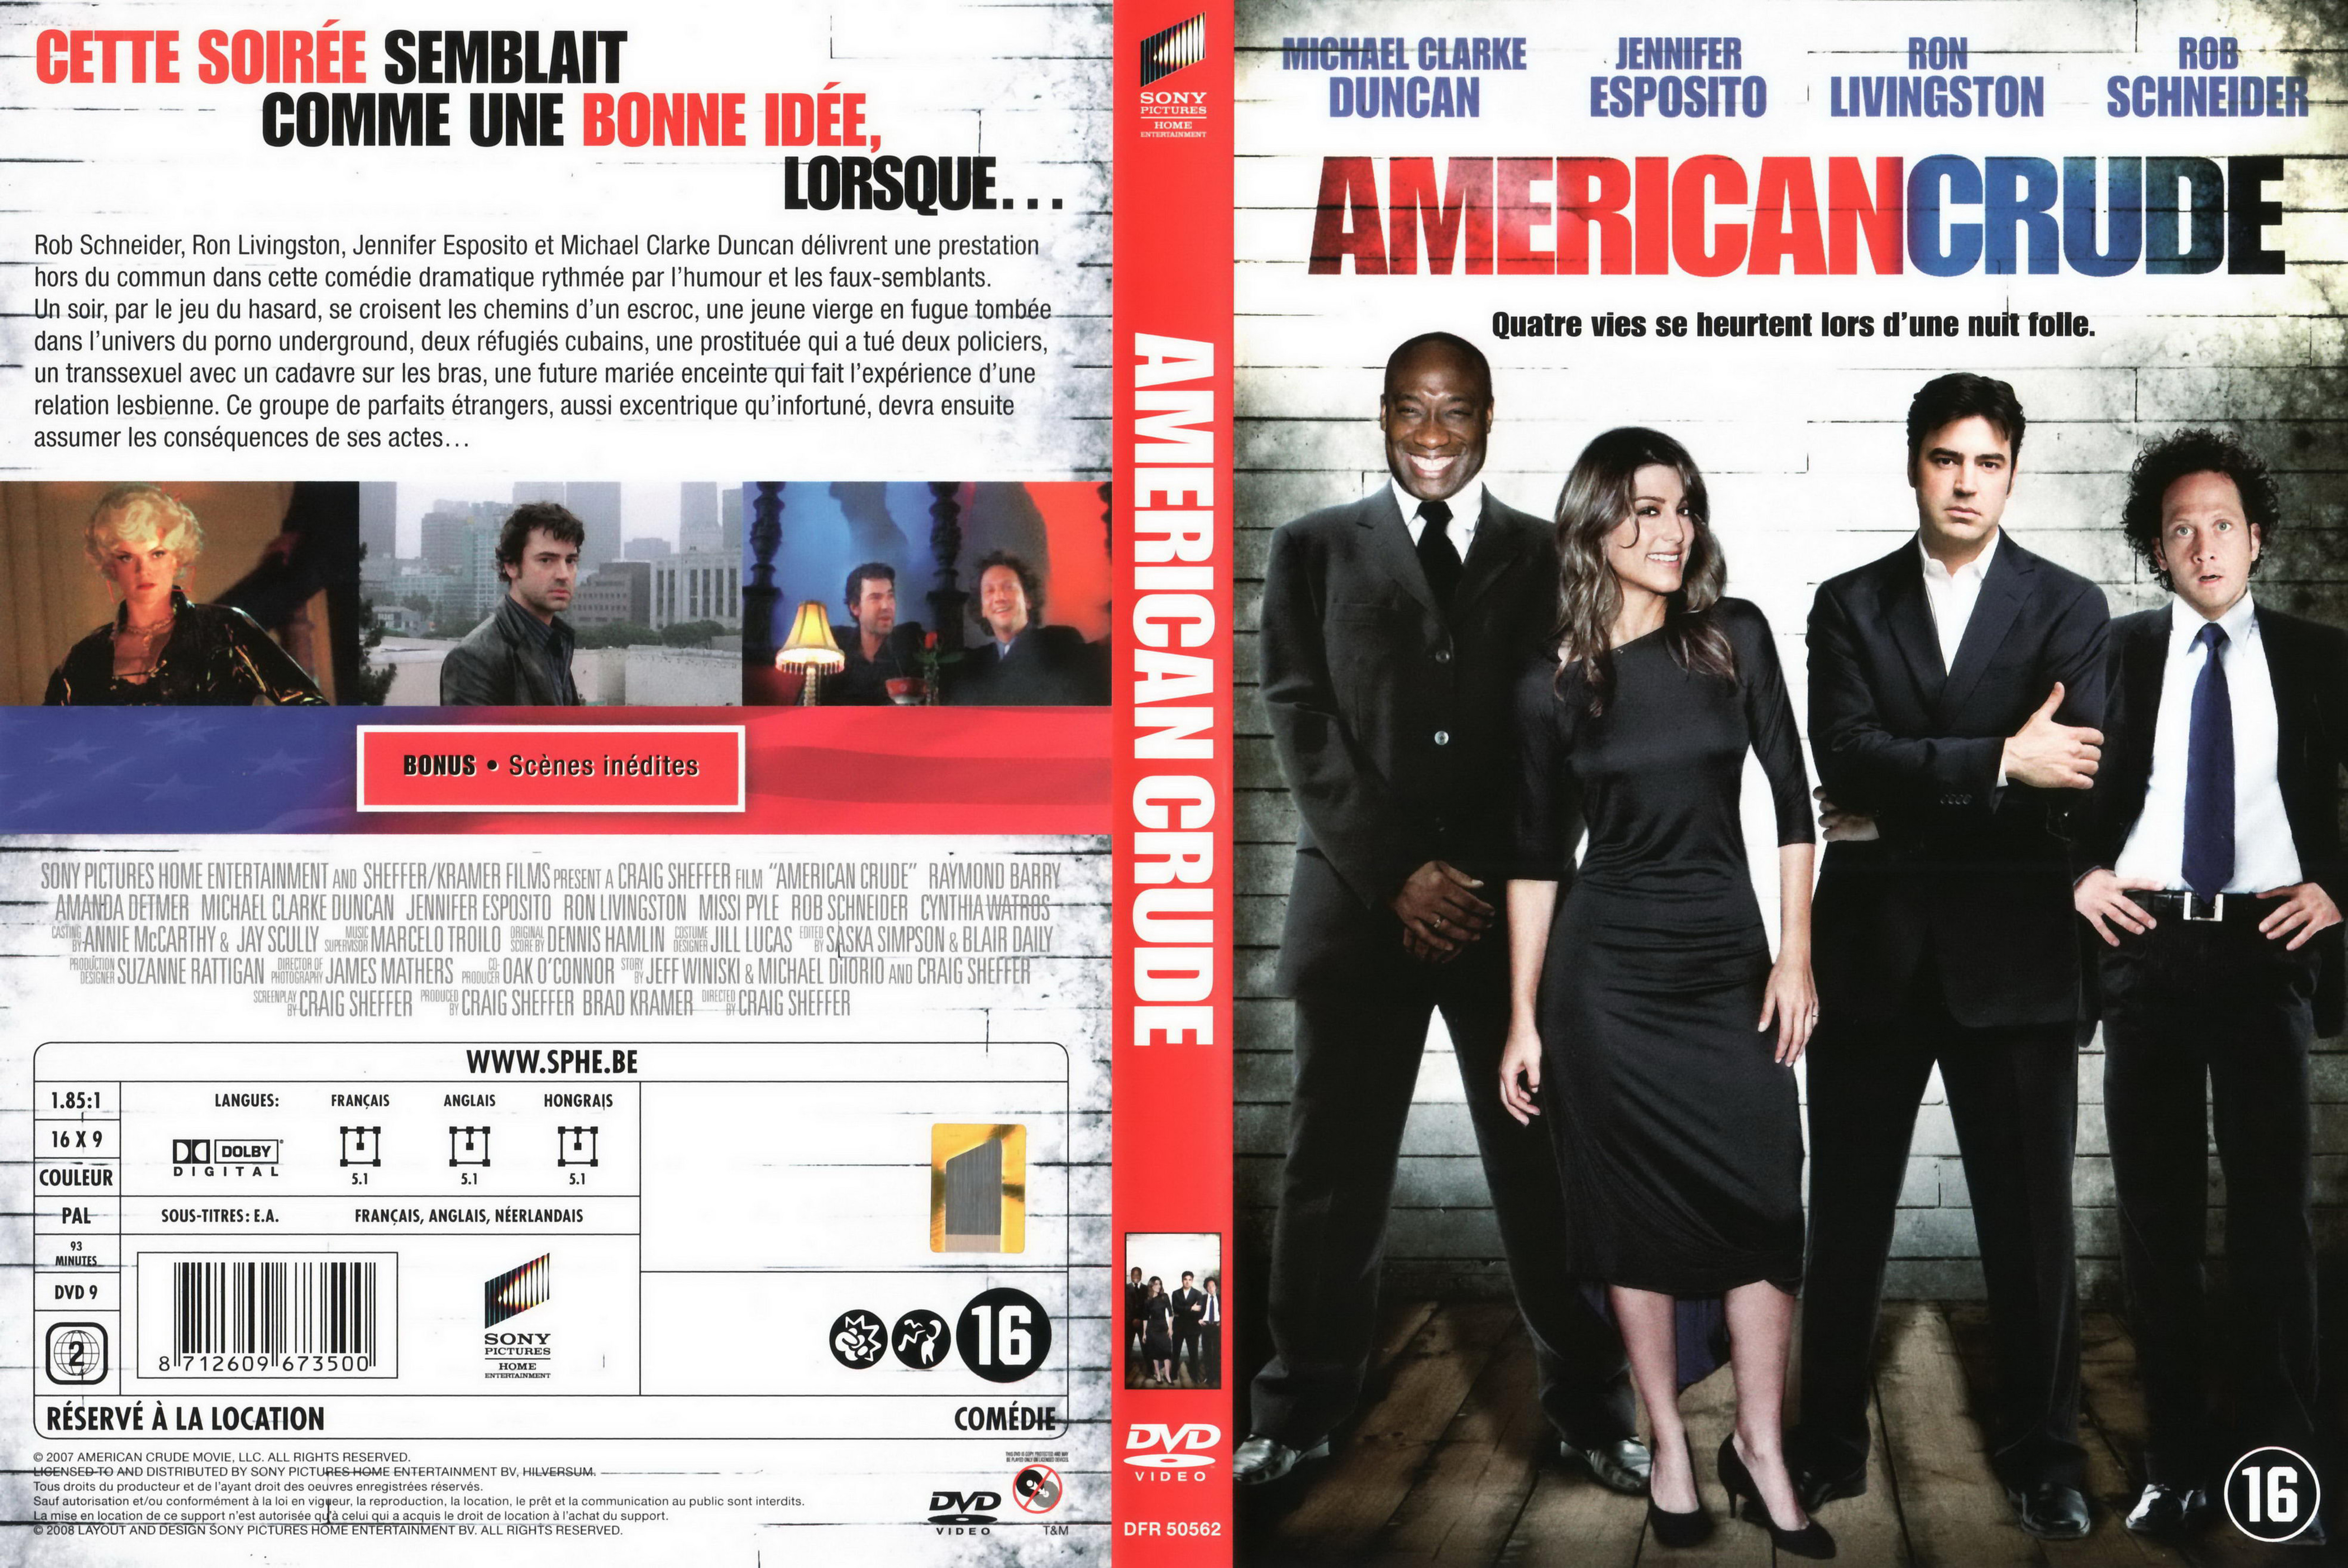 Jaquette DVD American crude v3